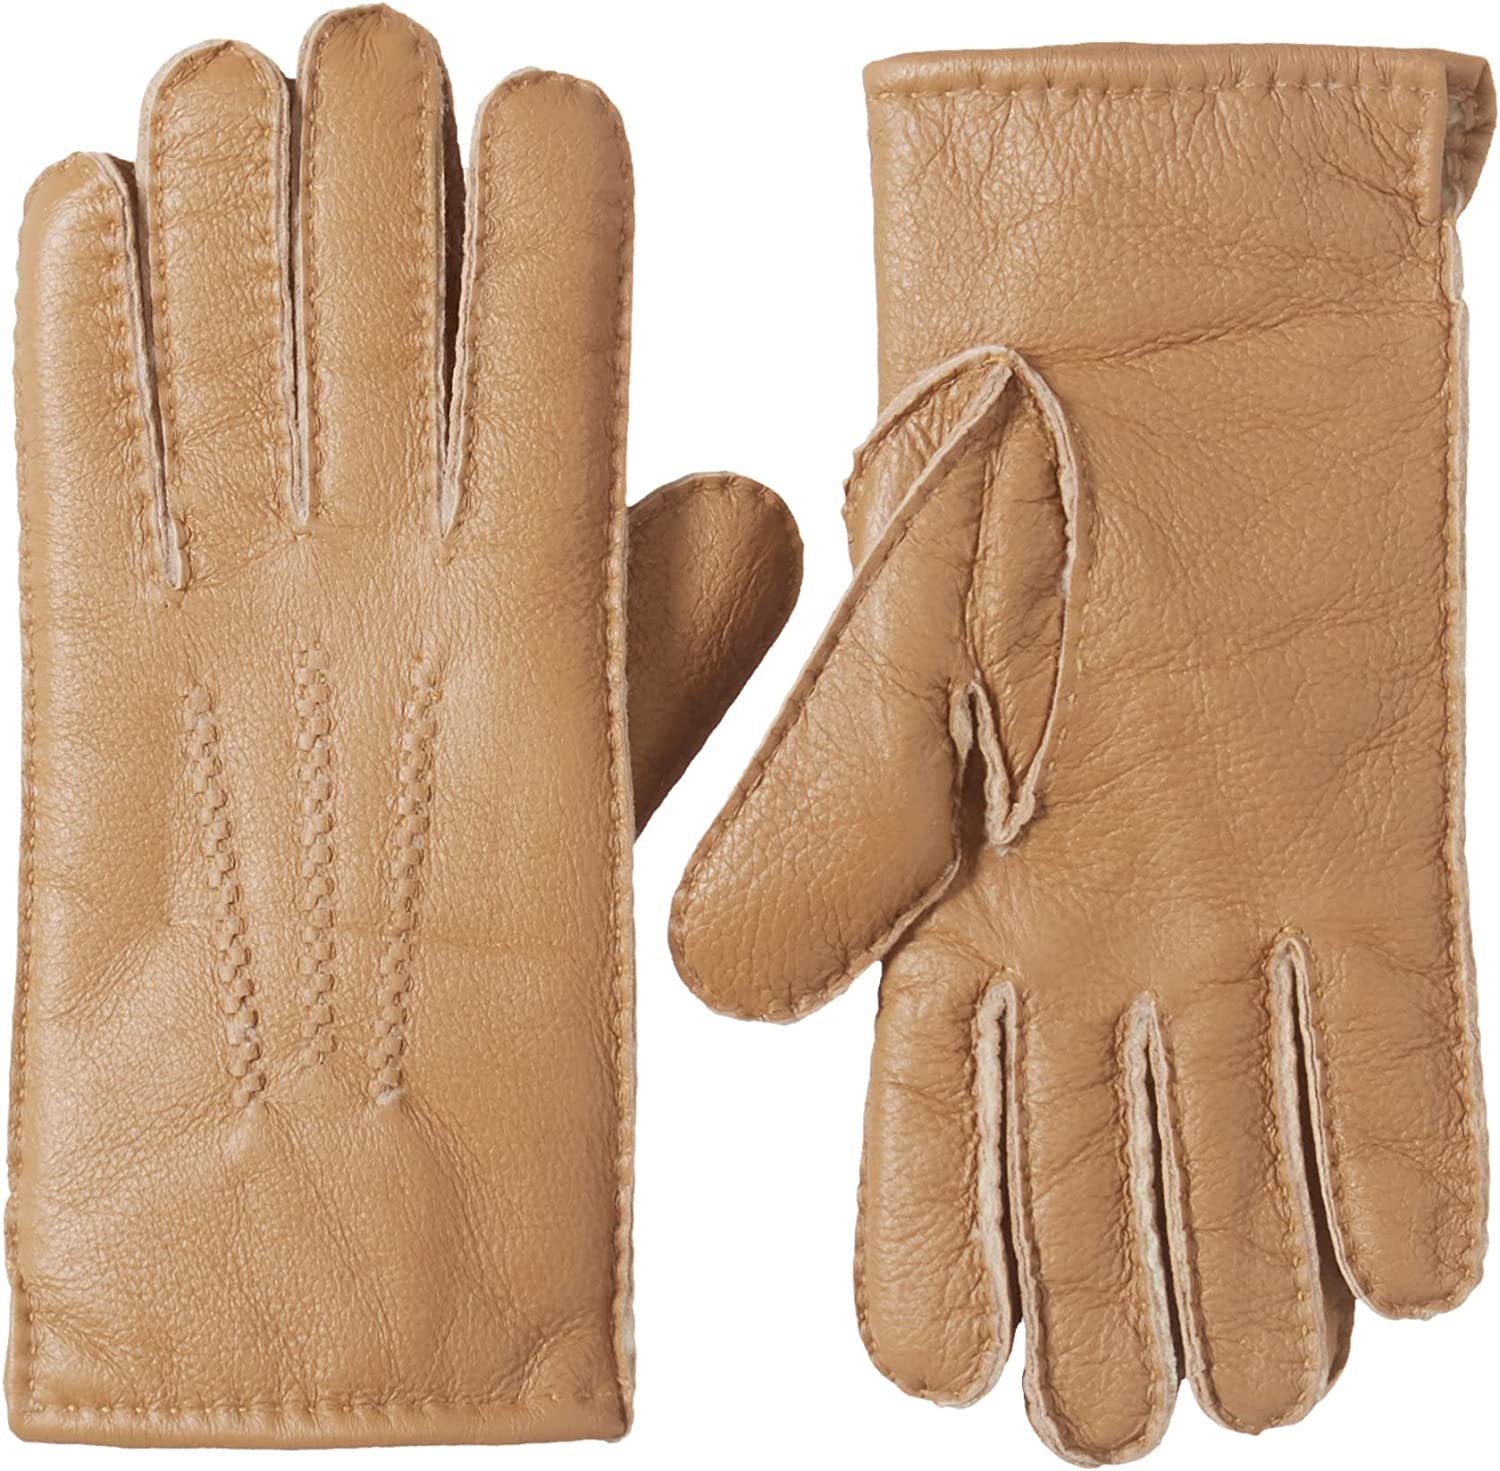 Hermès Brown Square Stitching Detailing Gloves Lambskin Leather